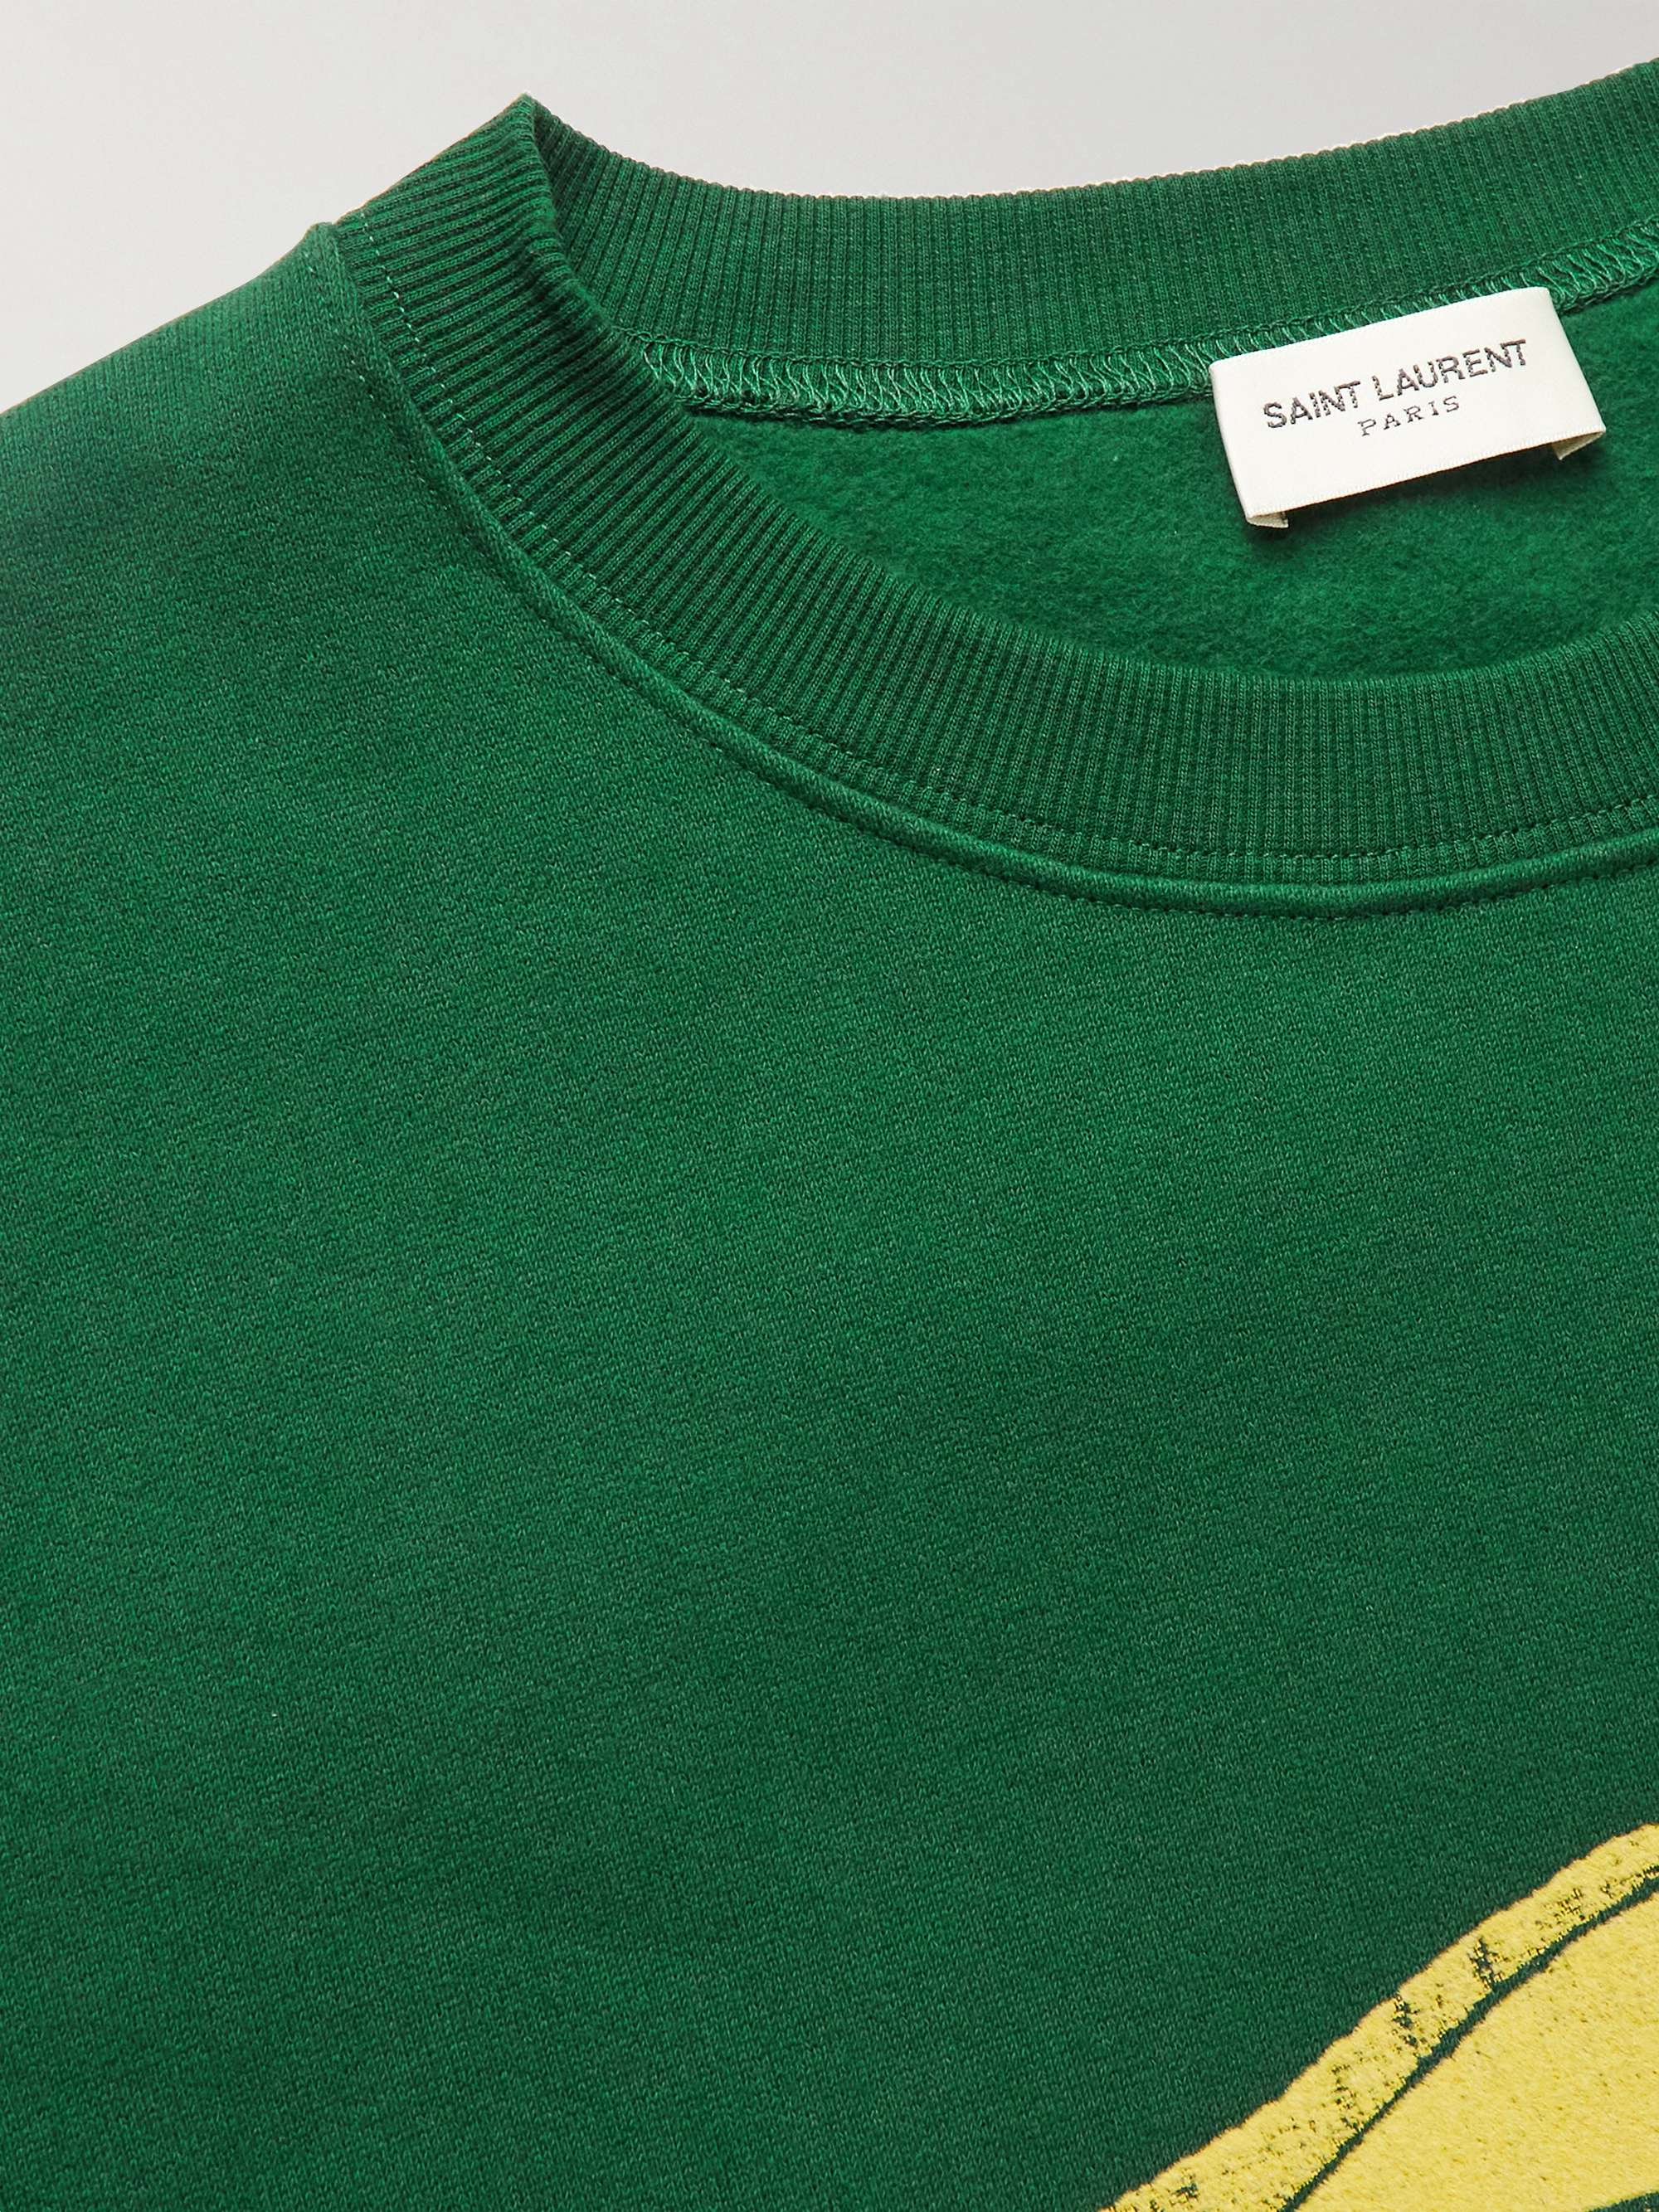 SAINT LAURENT Logo-Flocked Cotton-Jersey Sweatshirt